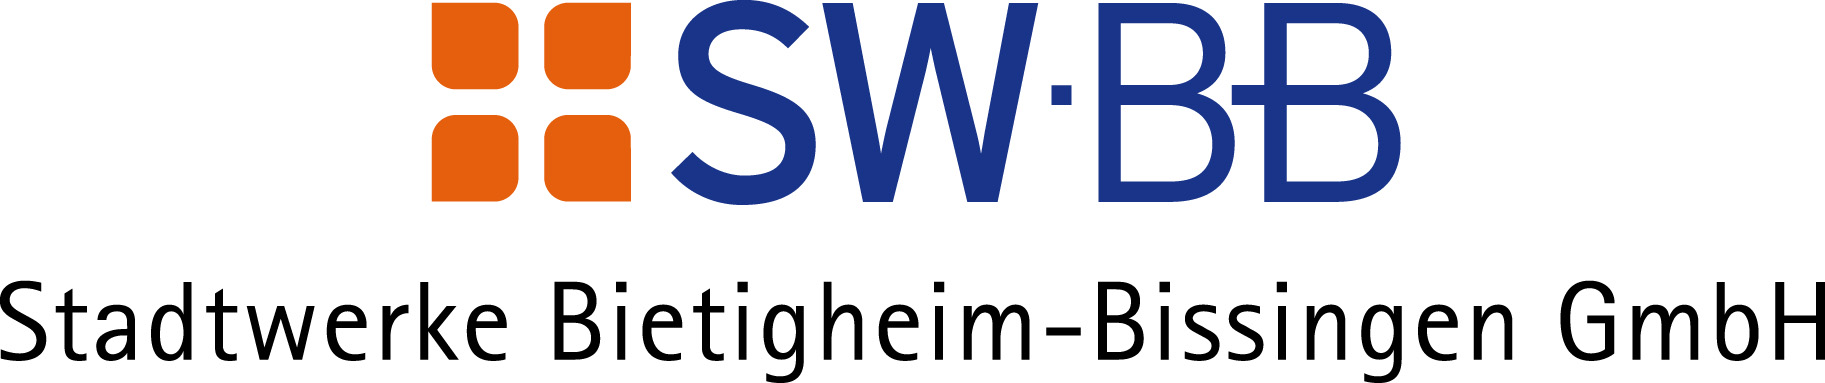 SWBB GmbH 4c